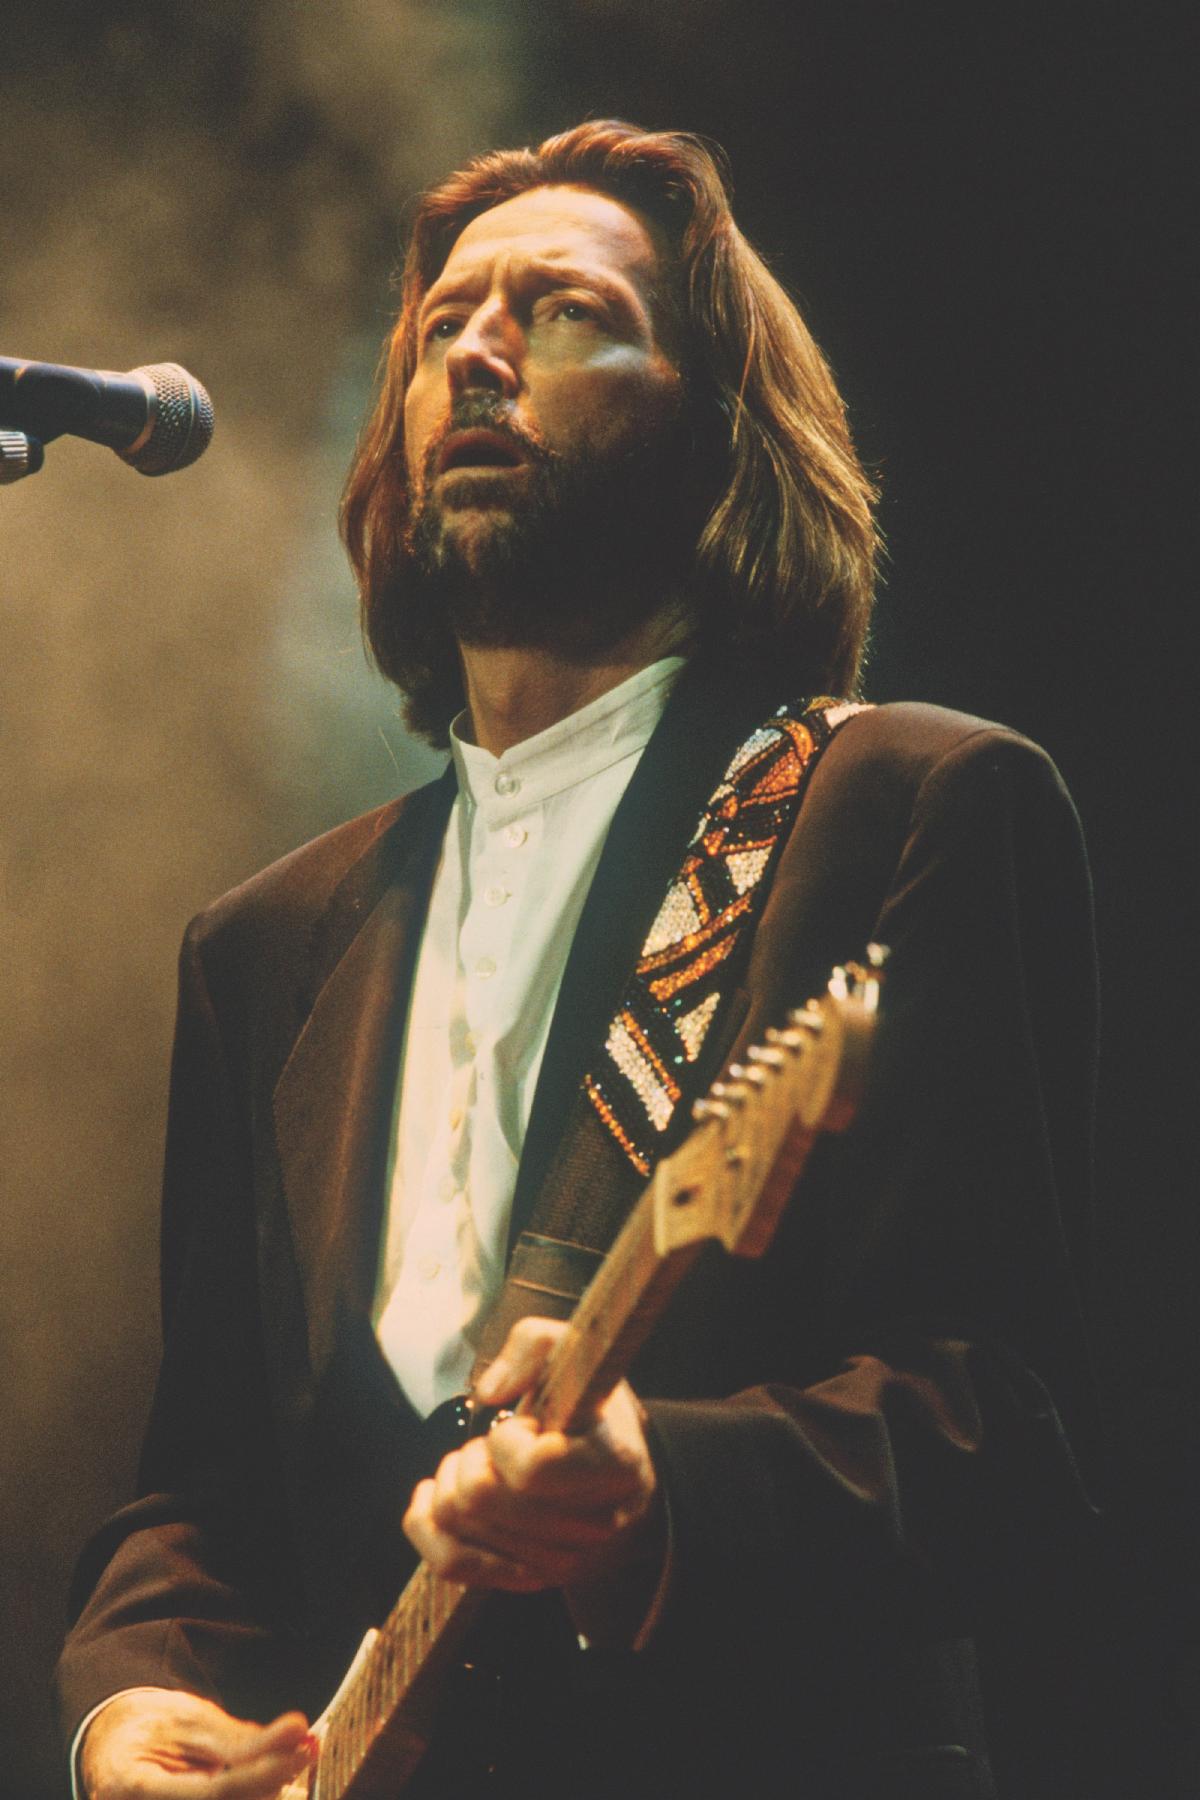 Eric Clapton - Pretending - (1989) 